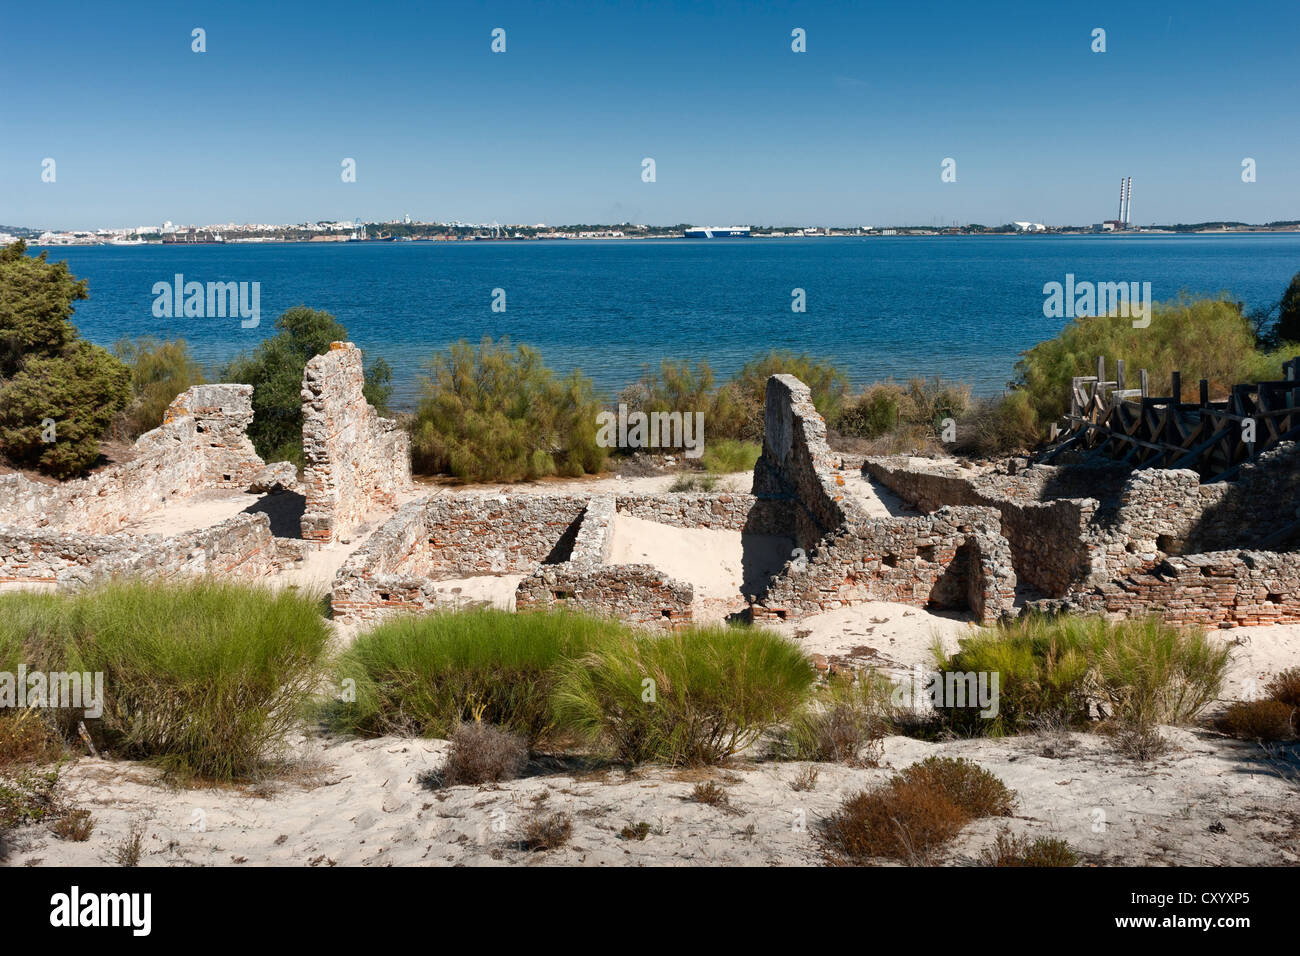 Roman ruins of the garum - fish salting - factory, Troia, Setubal, Portugal Stock Photo